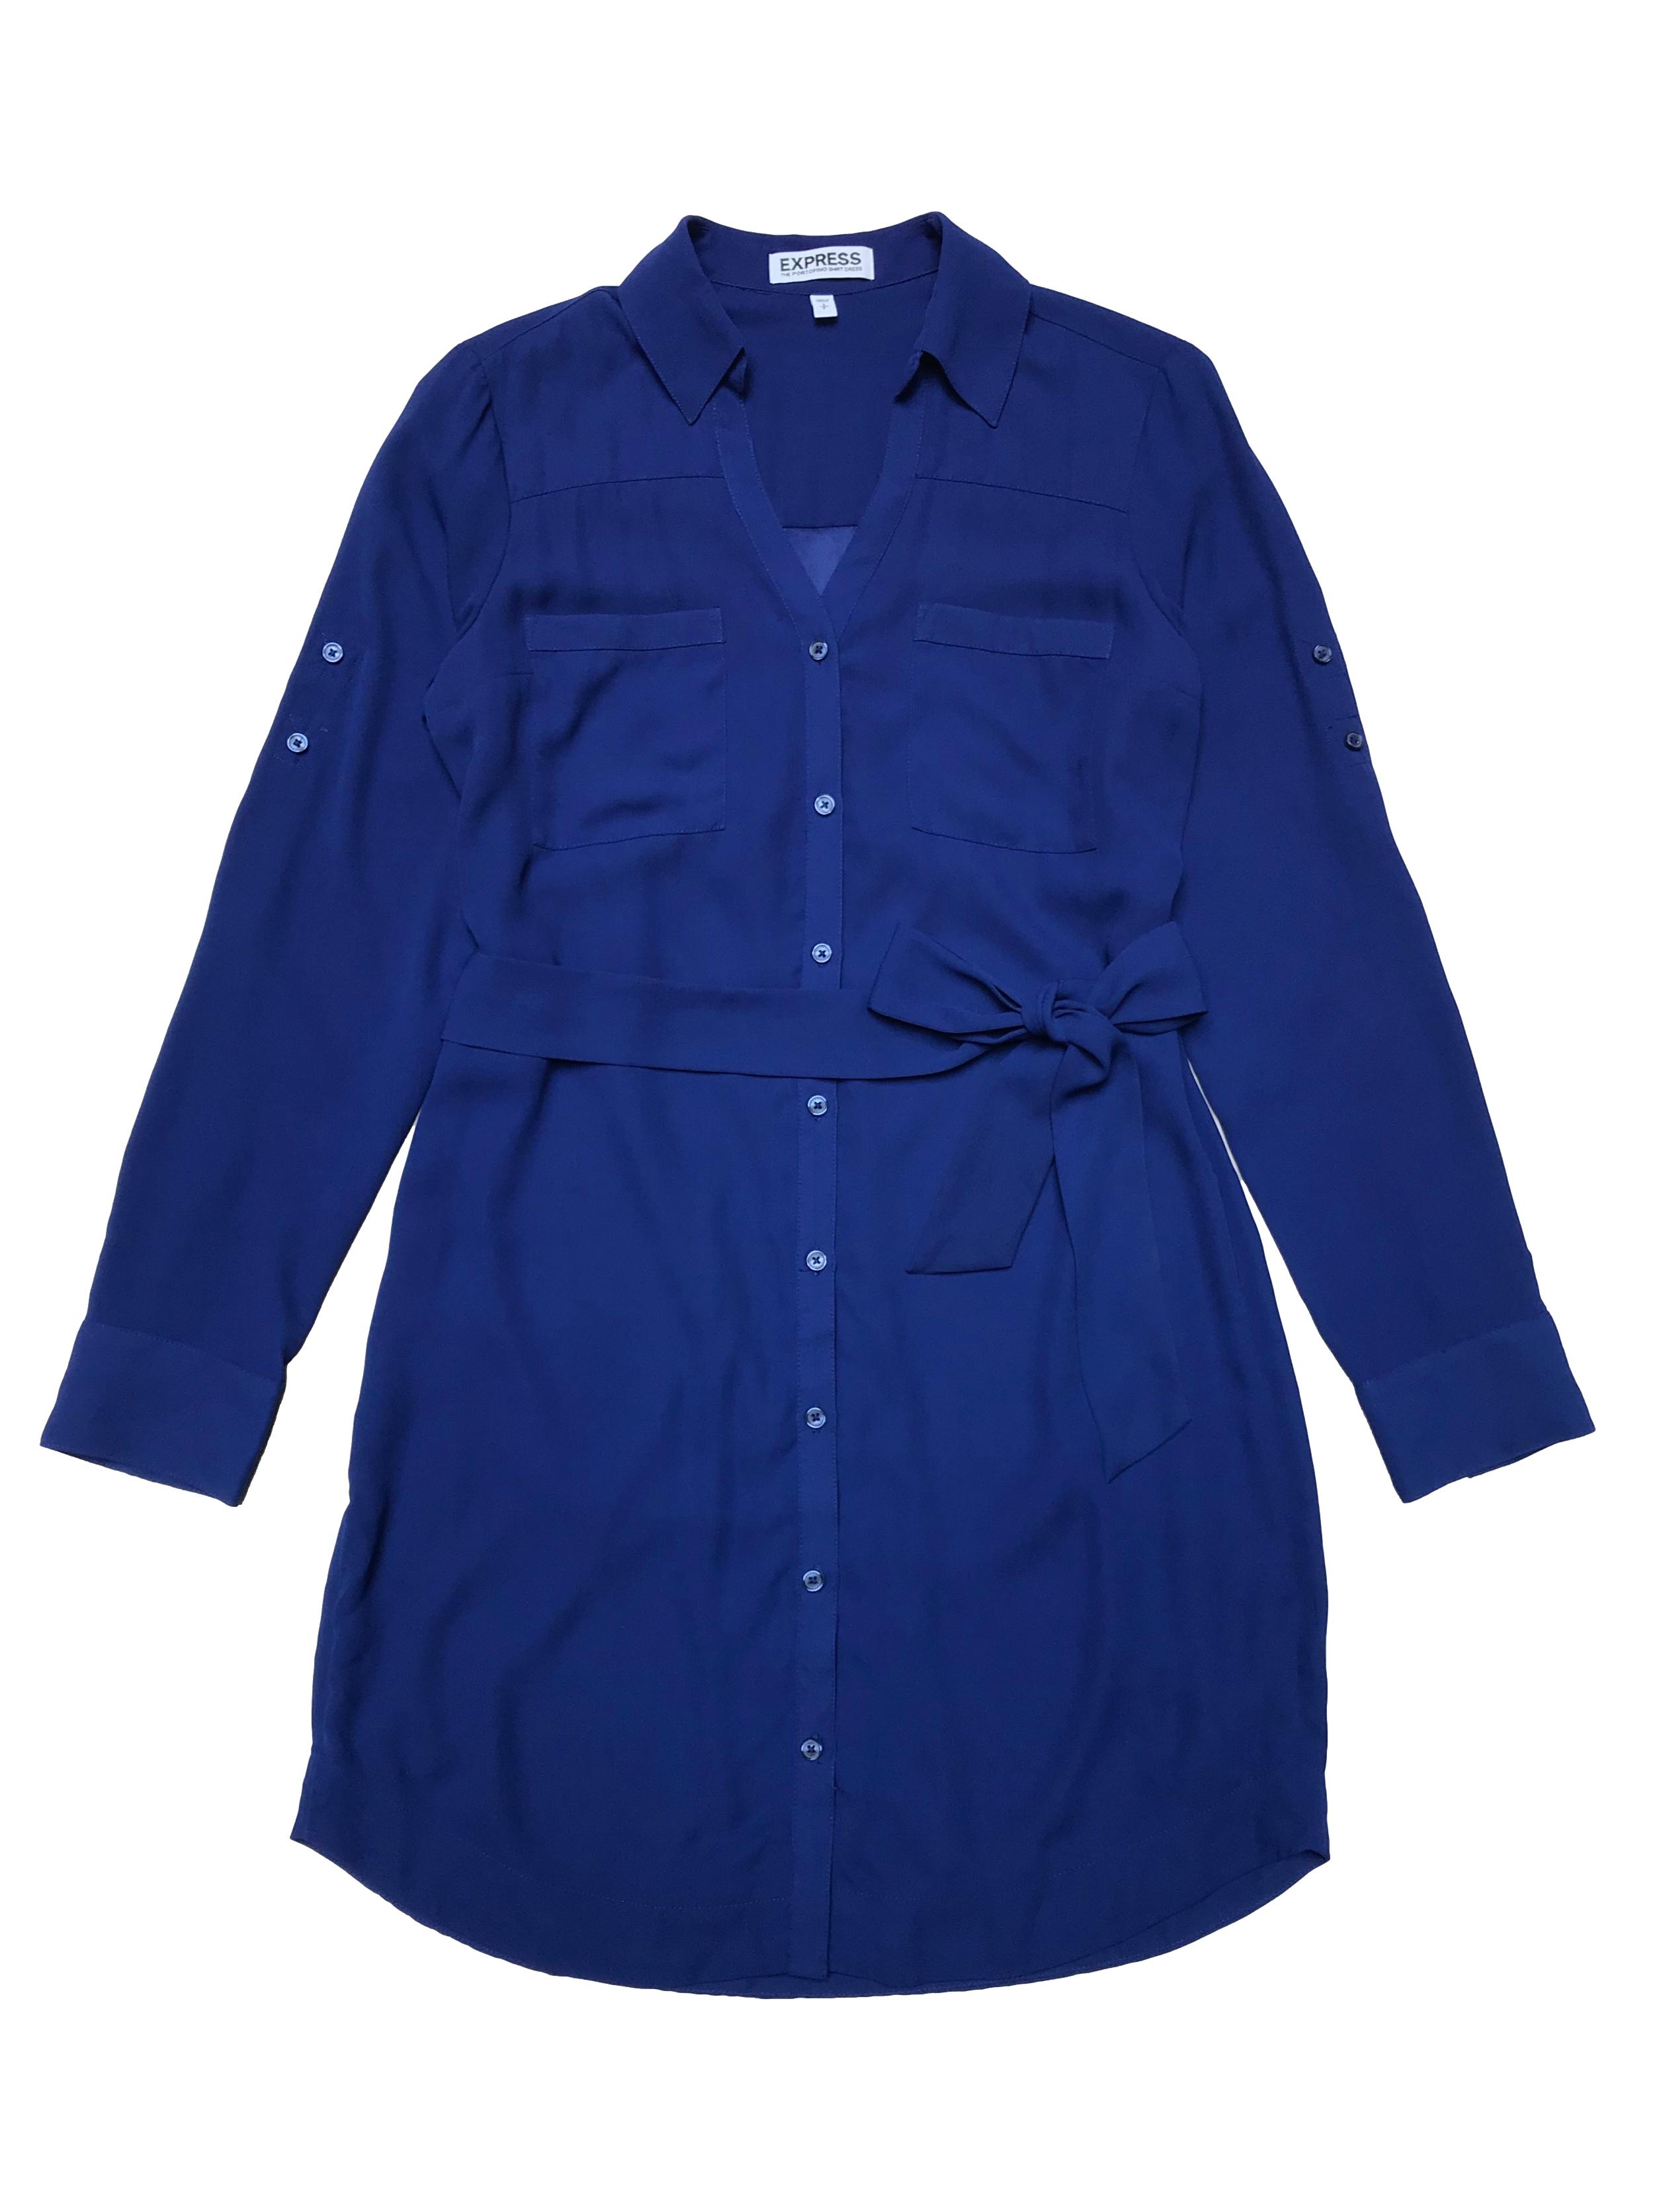 vestido - Vestido camisero Express de gasa azul, forrado, bolsillos en el pecho, cinto para regular y mangas largas regulables con botón. Ancho 96cm Largo 85cm.   - Talla S  - Express